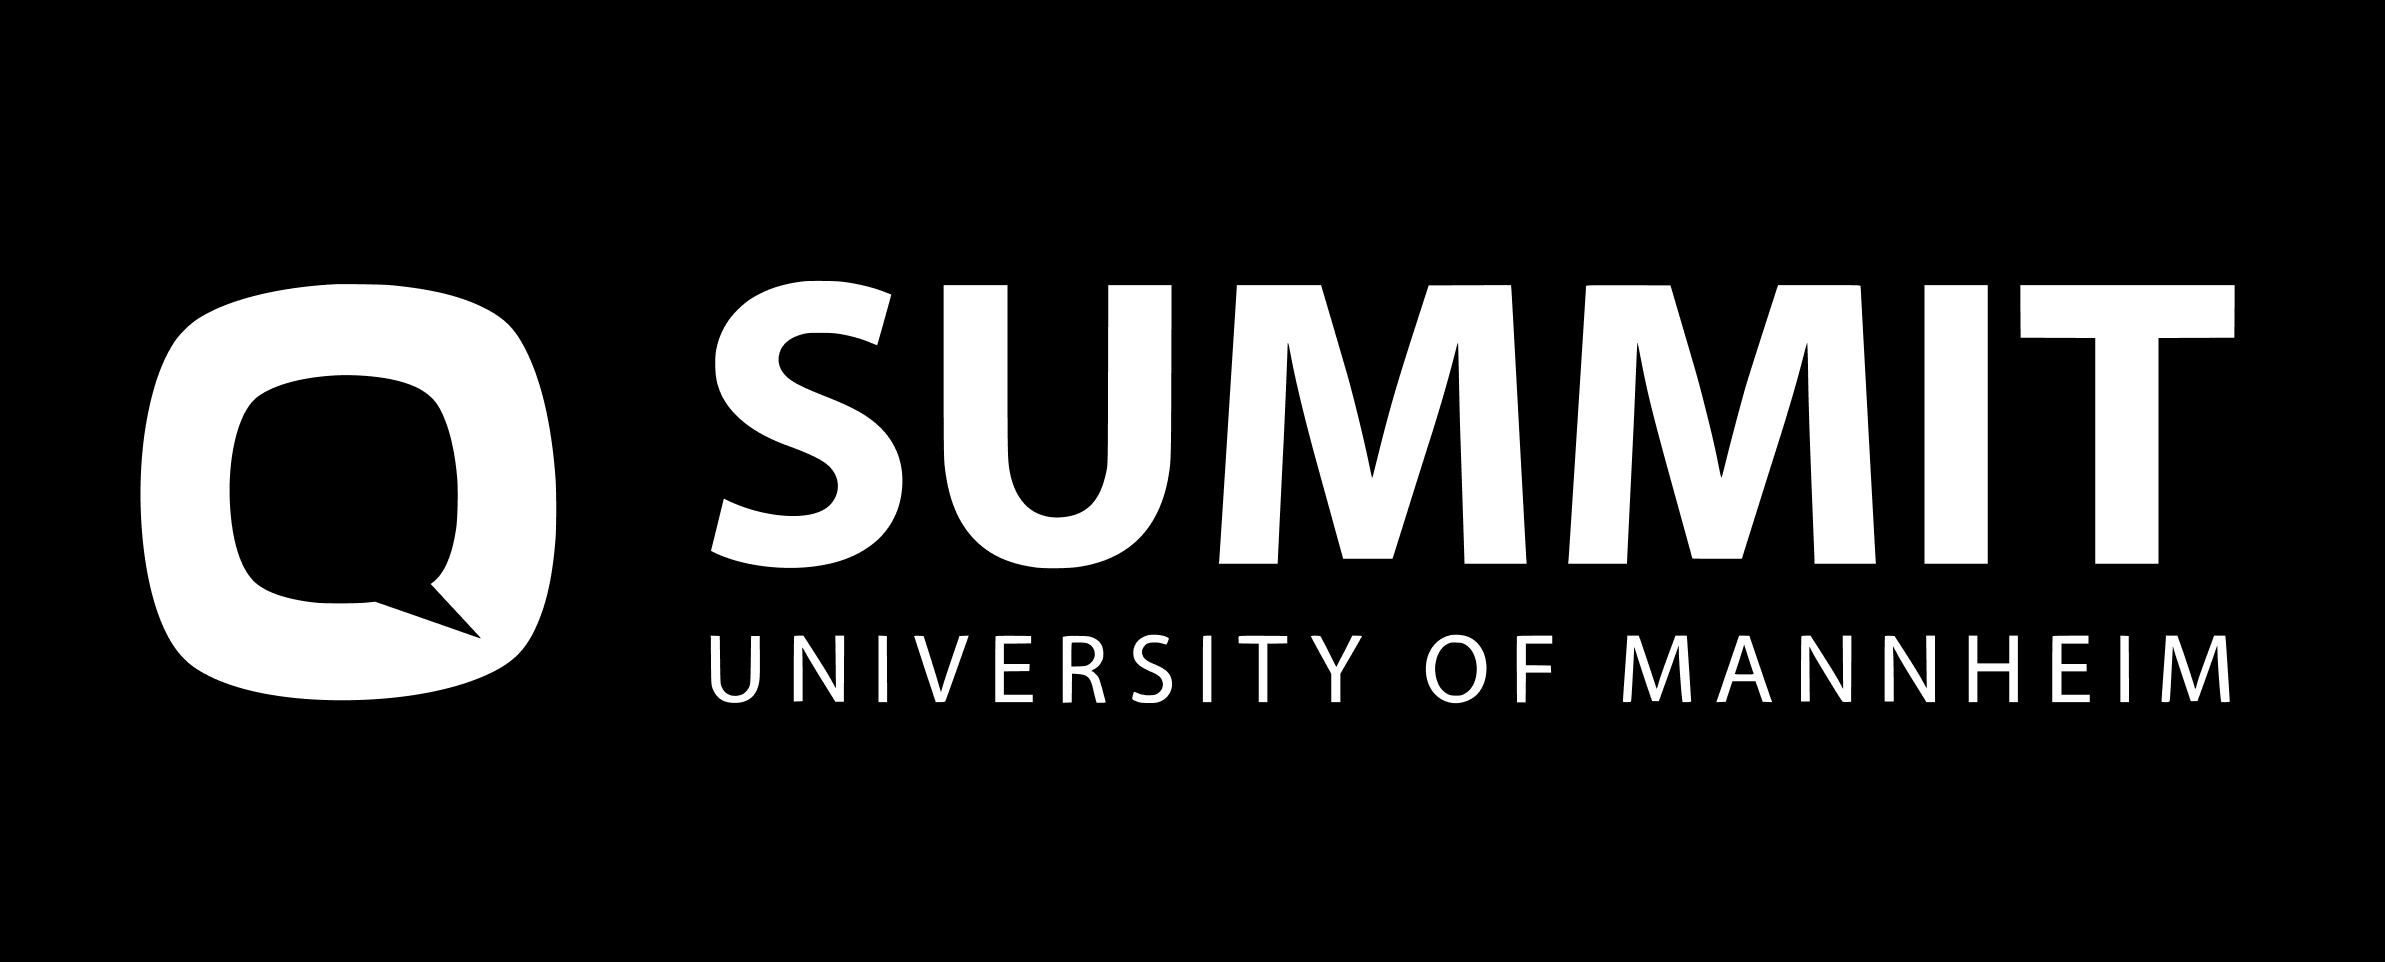 NetworkP Summit University of mannheim